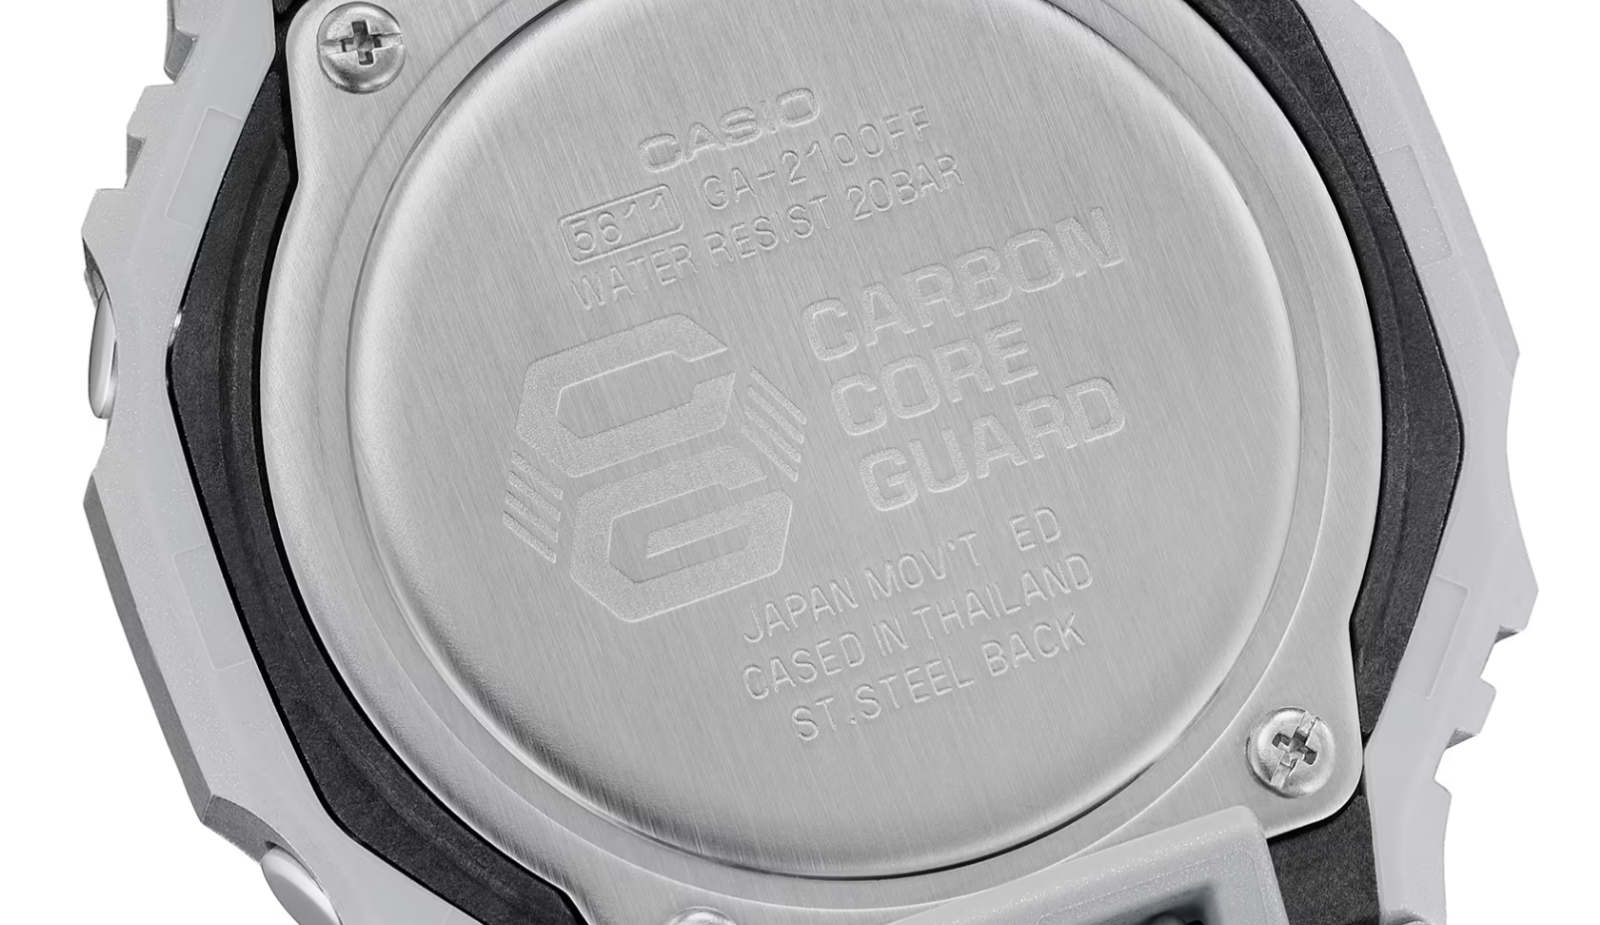 Casio G Shock 2100 Series Digital Mirror LCD Dial Men's Watch GA2100FF-8A